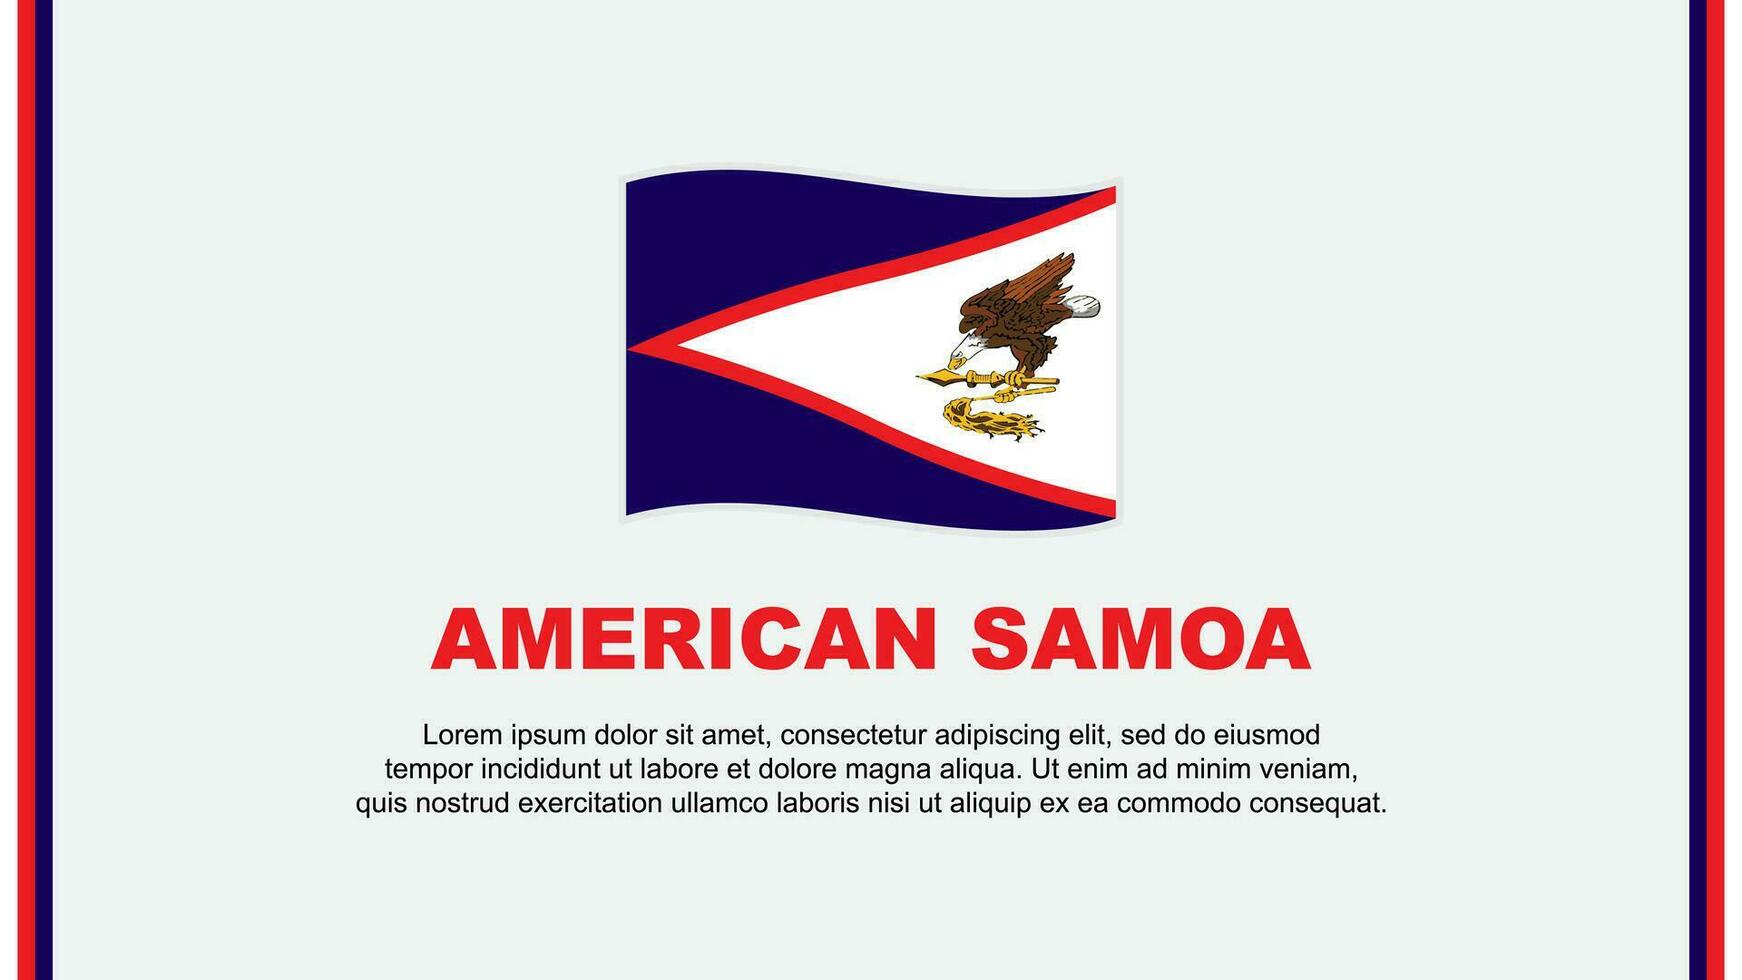 Amerikaans Samoa vlag abstract achtergrond ontwerp sjabloon. Amerikaans Samoa onafhankelijkheid dag banier sociaal media vector illustratie. Amerikaans Samoa tekenfilm